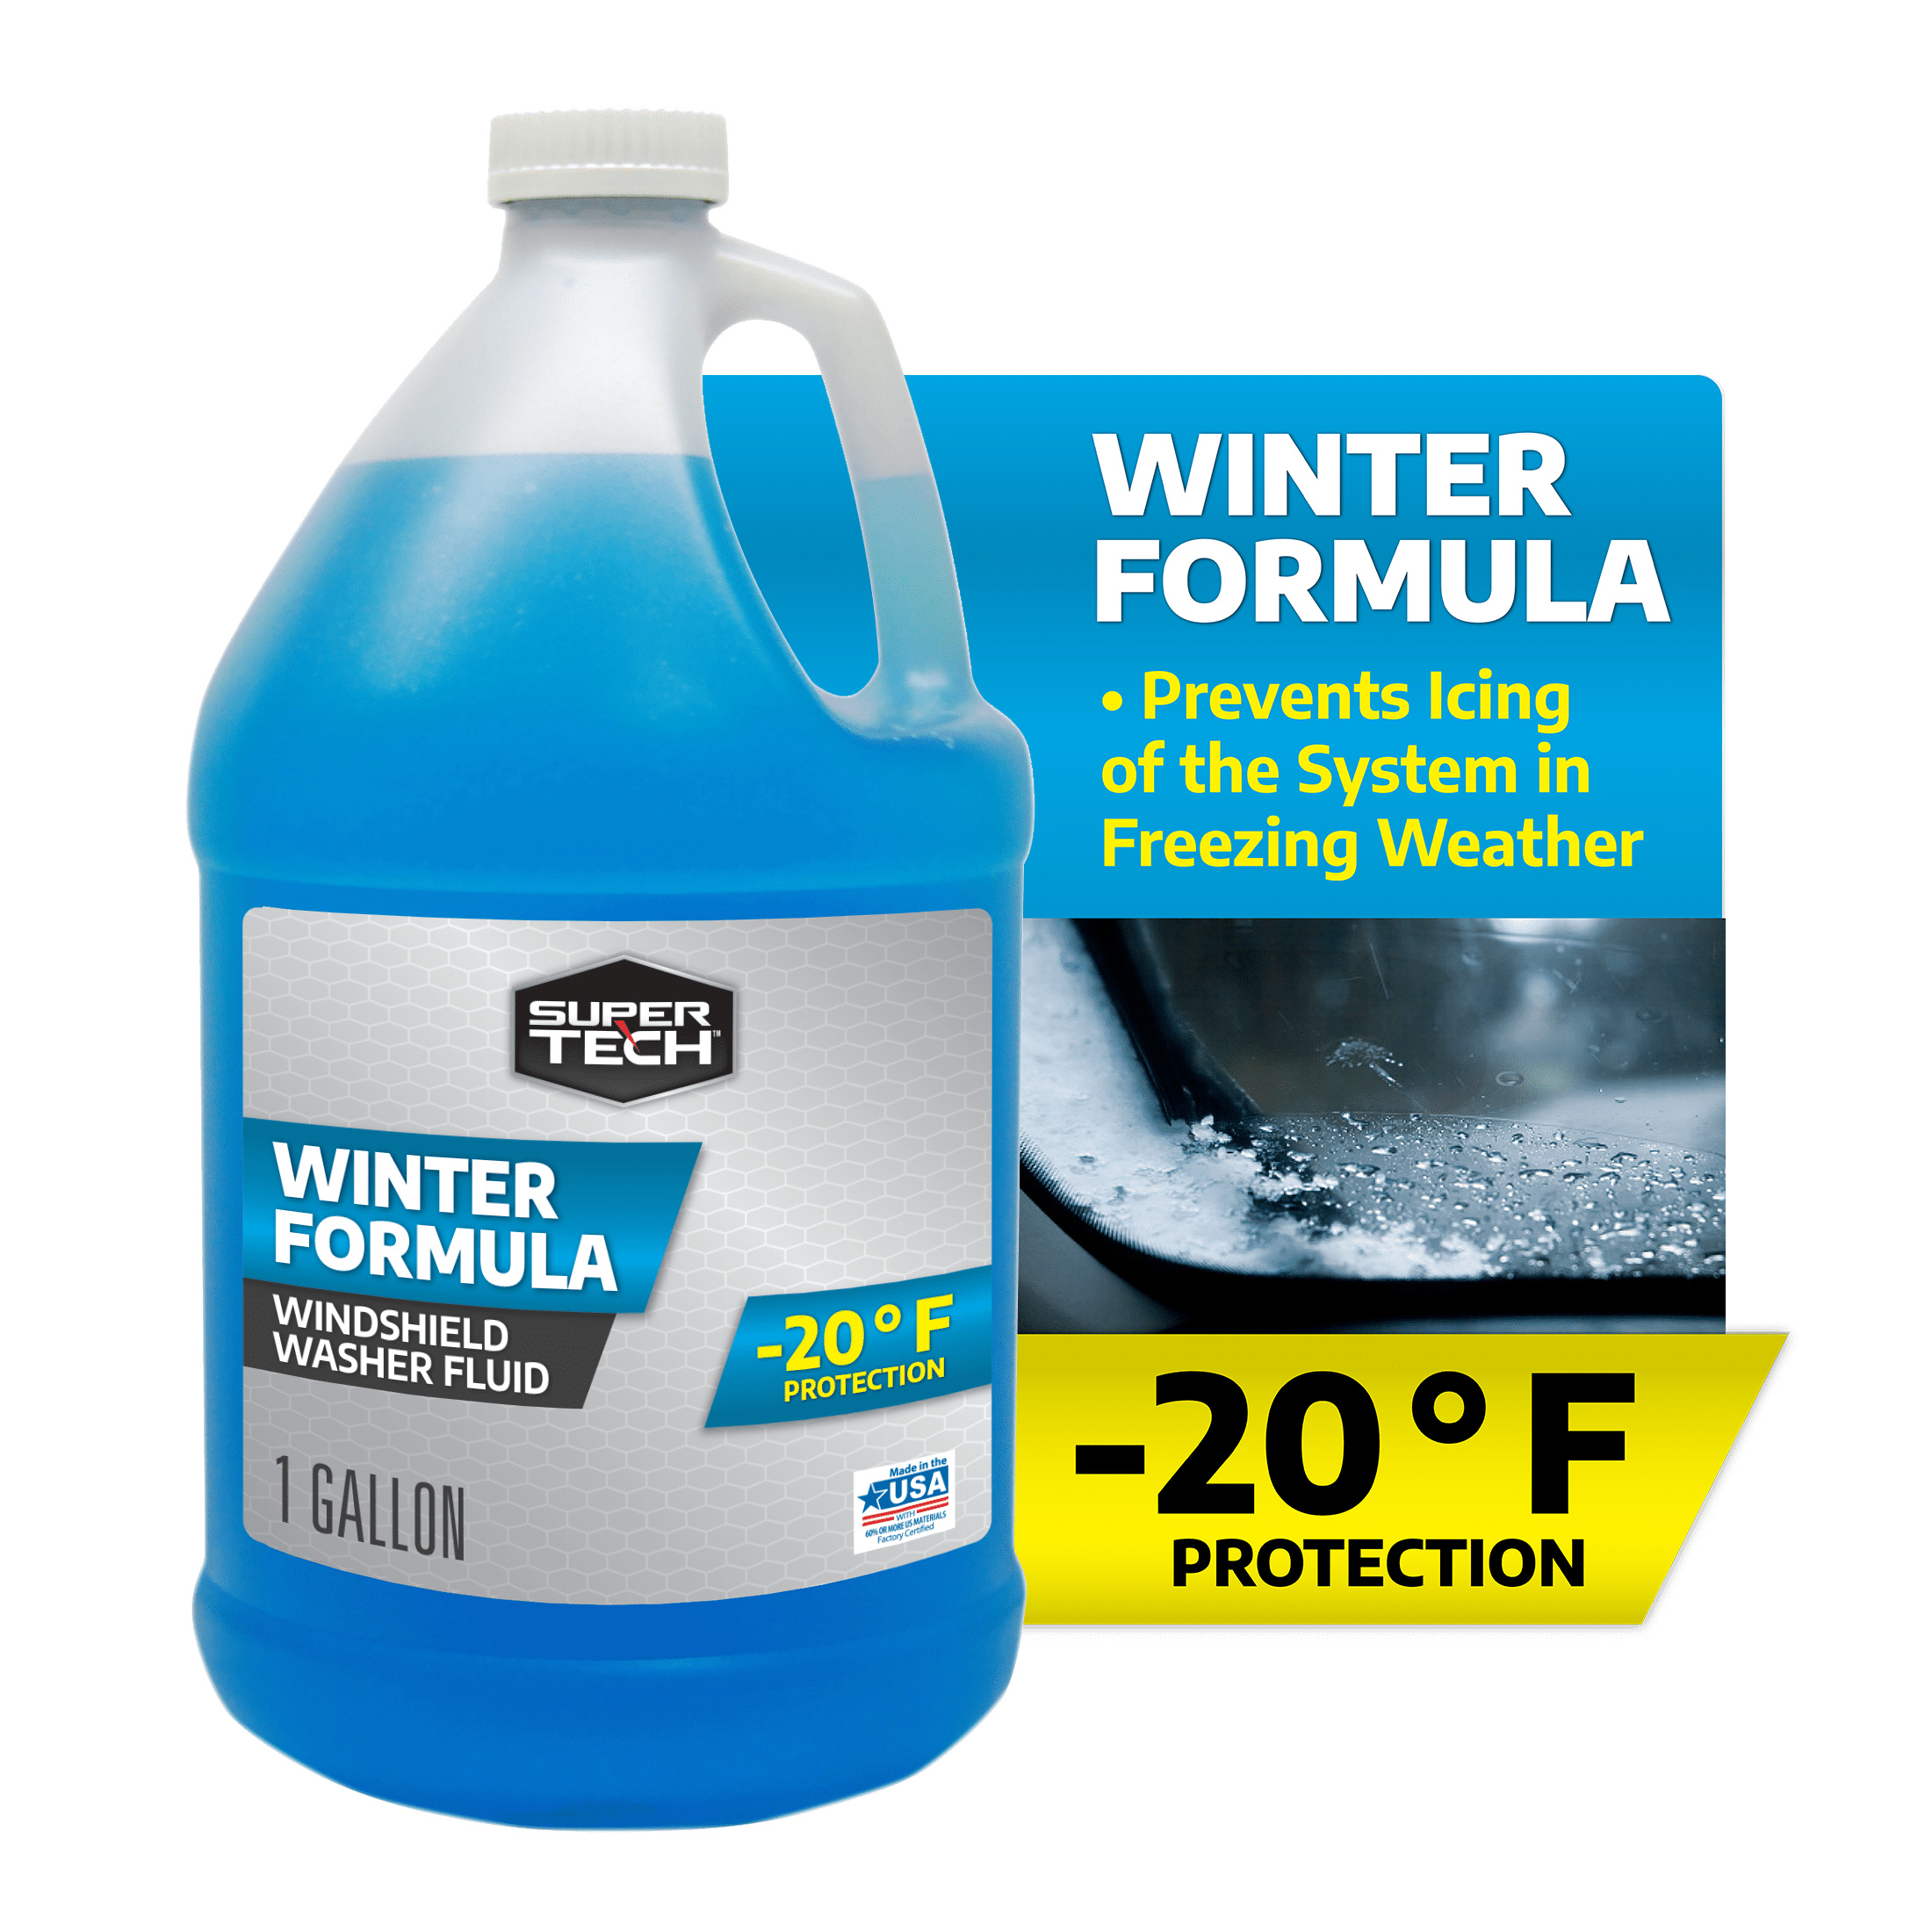 Super Tech Windshield Washer Fluid Winter -20F Formula, 1 Gallon